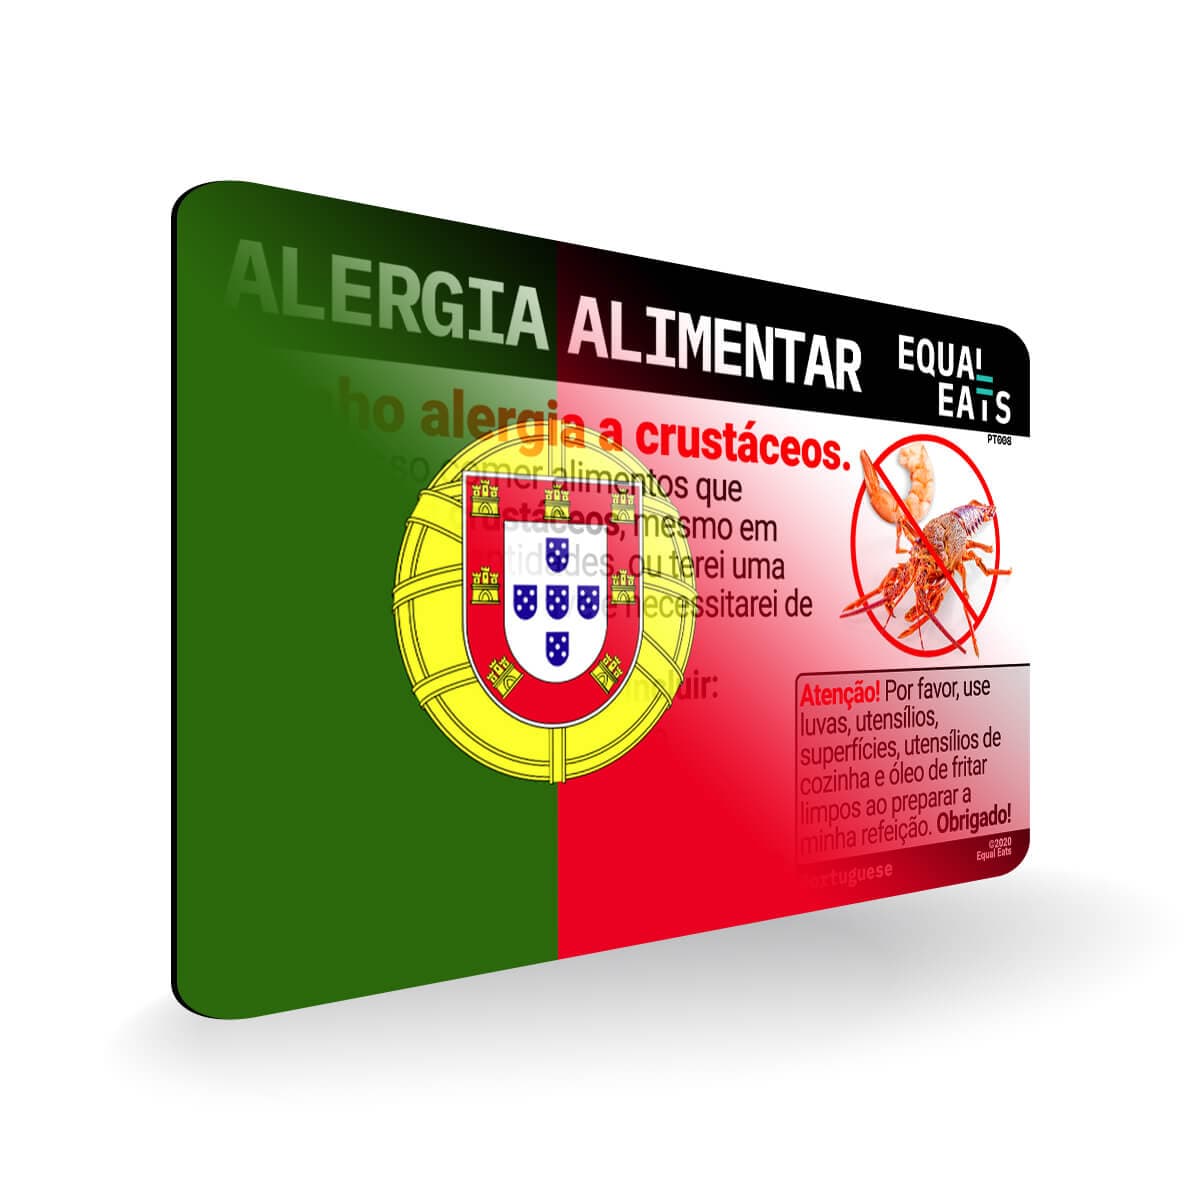 Crustacean Allergy in Portuguese. Crustacean Allergy Card for Portugal